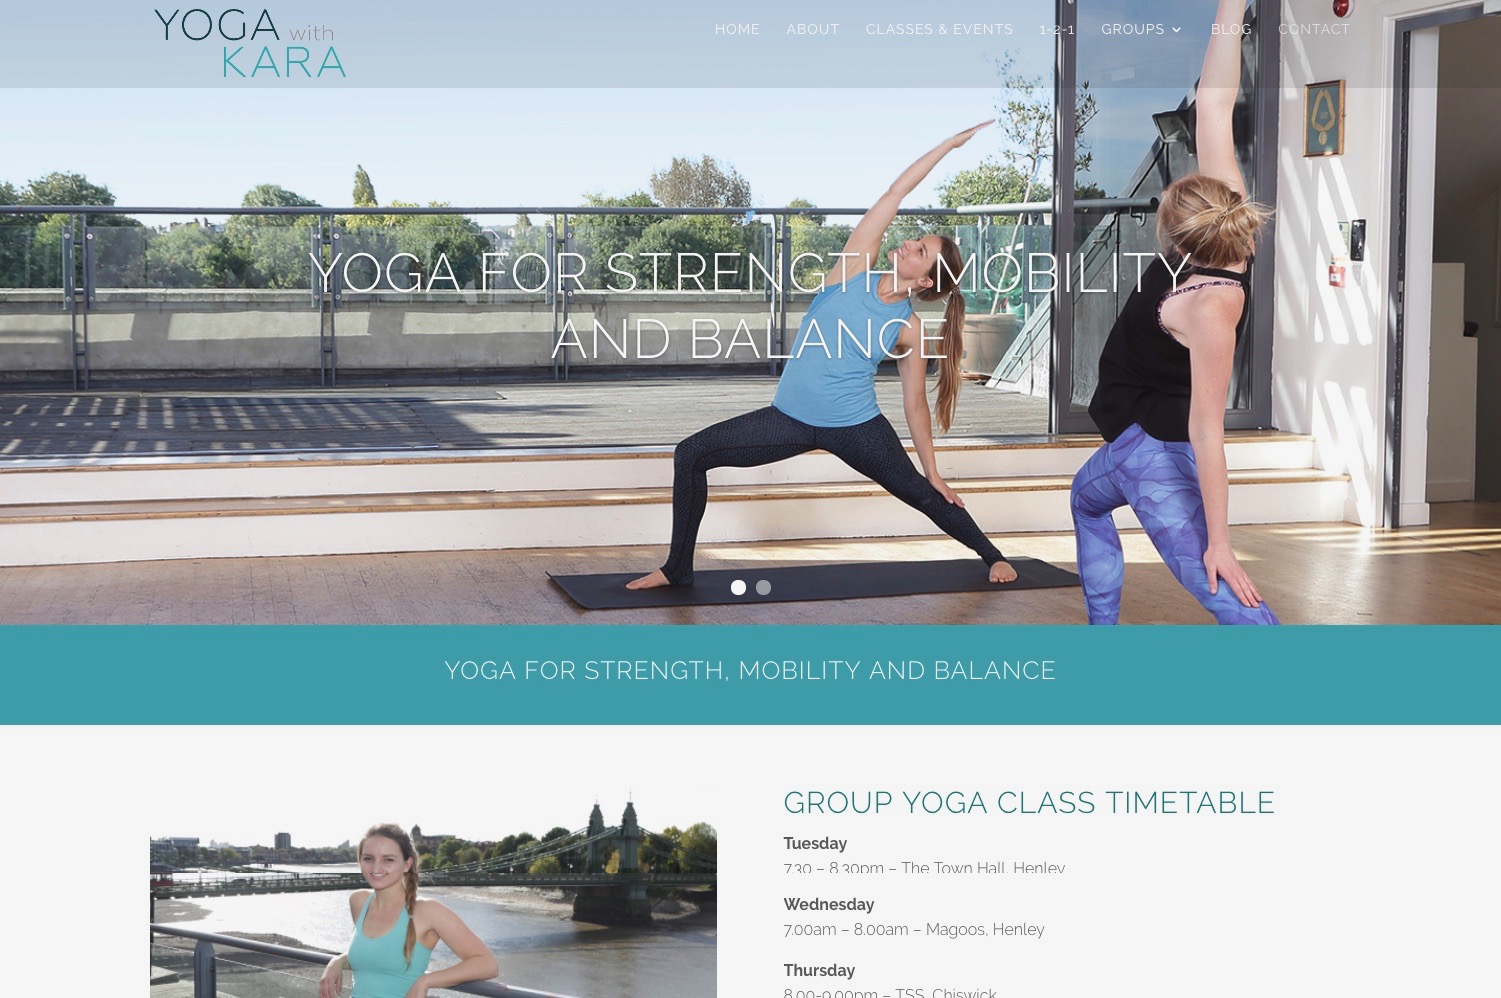 Yoga With Kara Yoga - Yoga In London